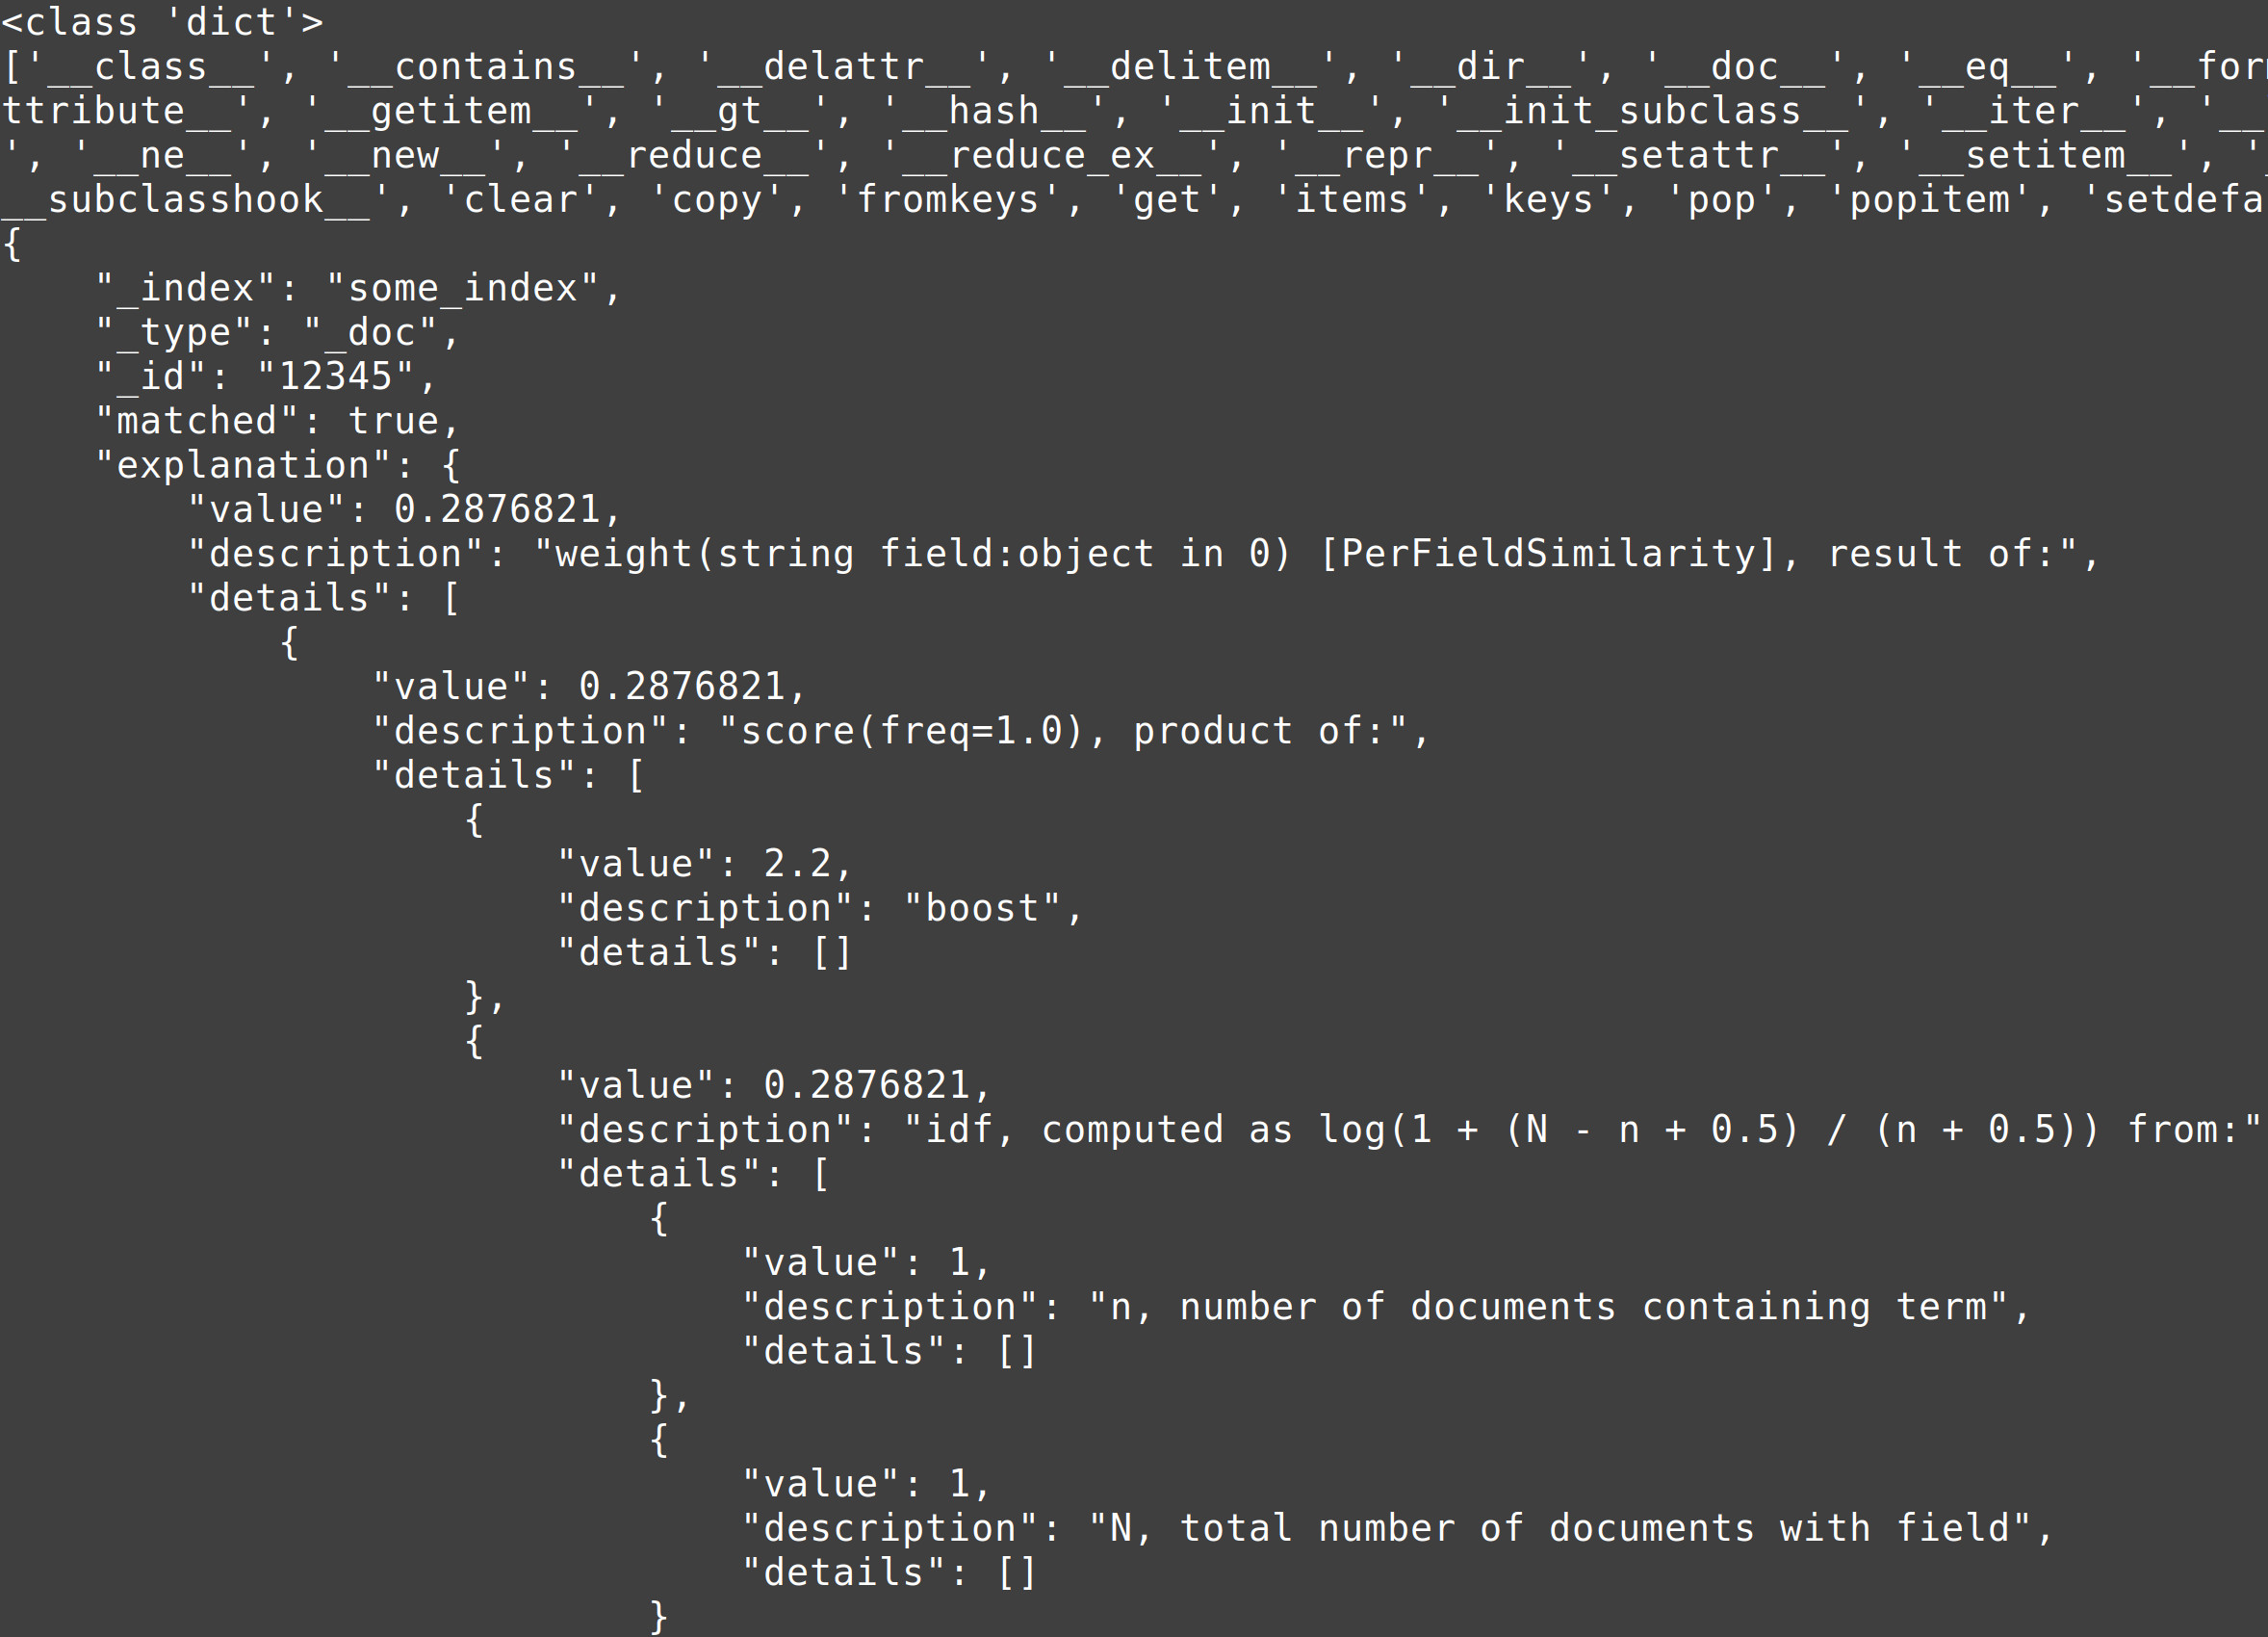 Screenshot of the Elasticsearch Explain API call in Python returning query data